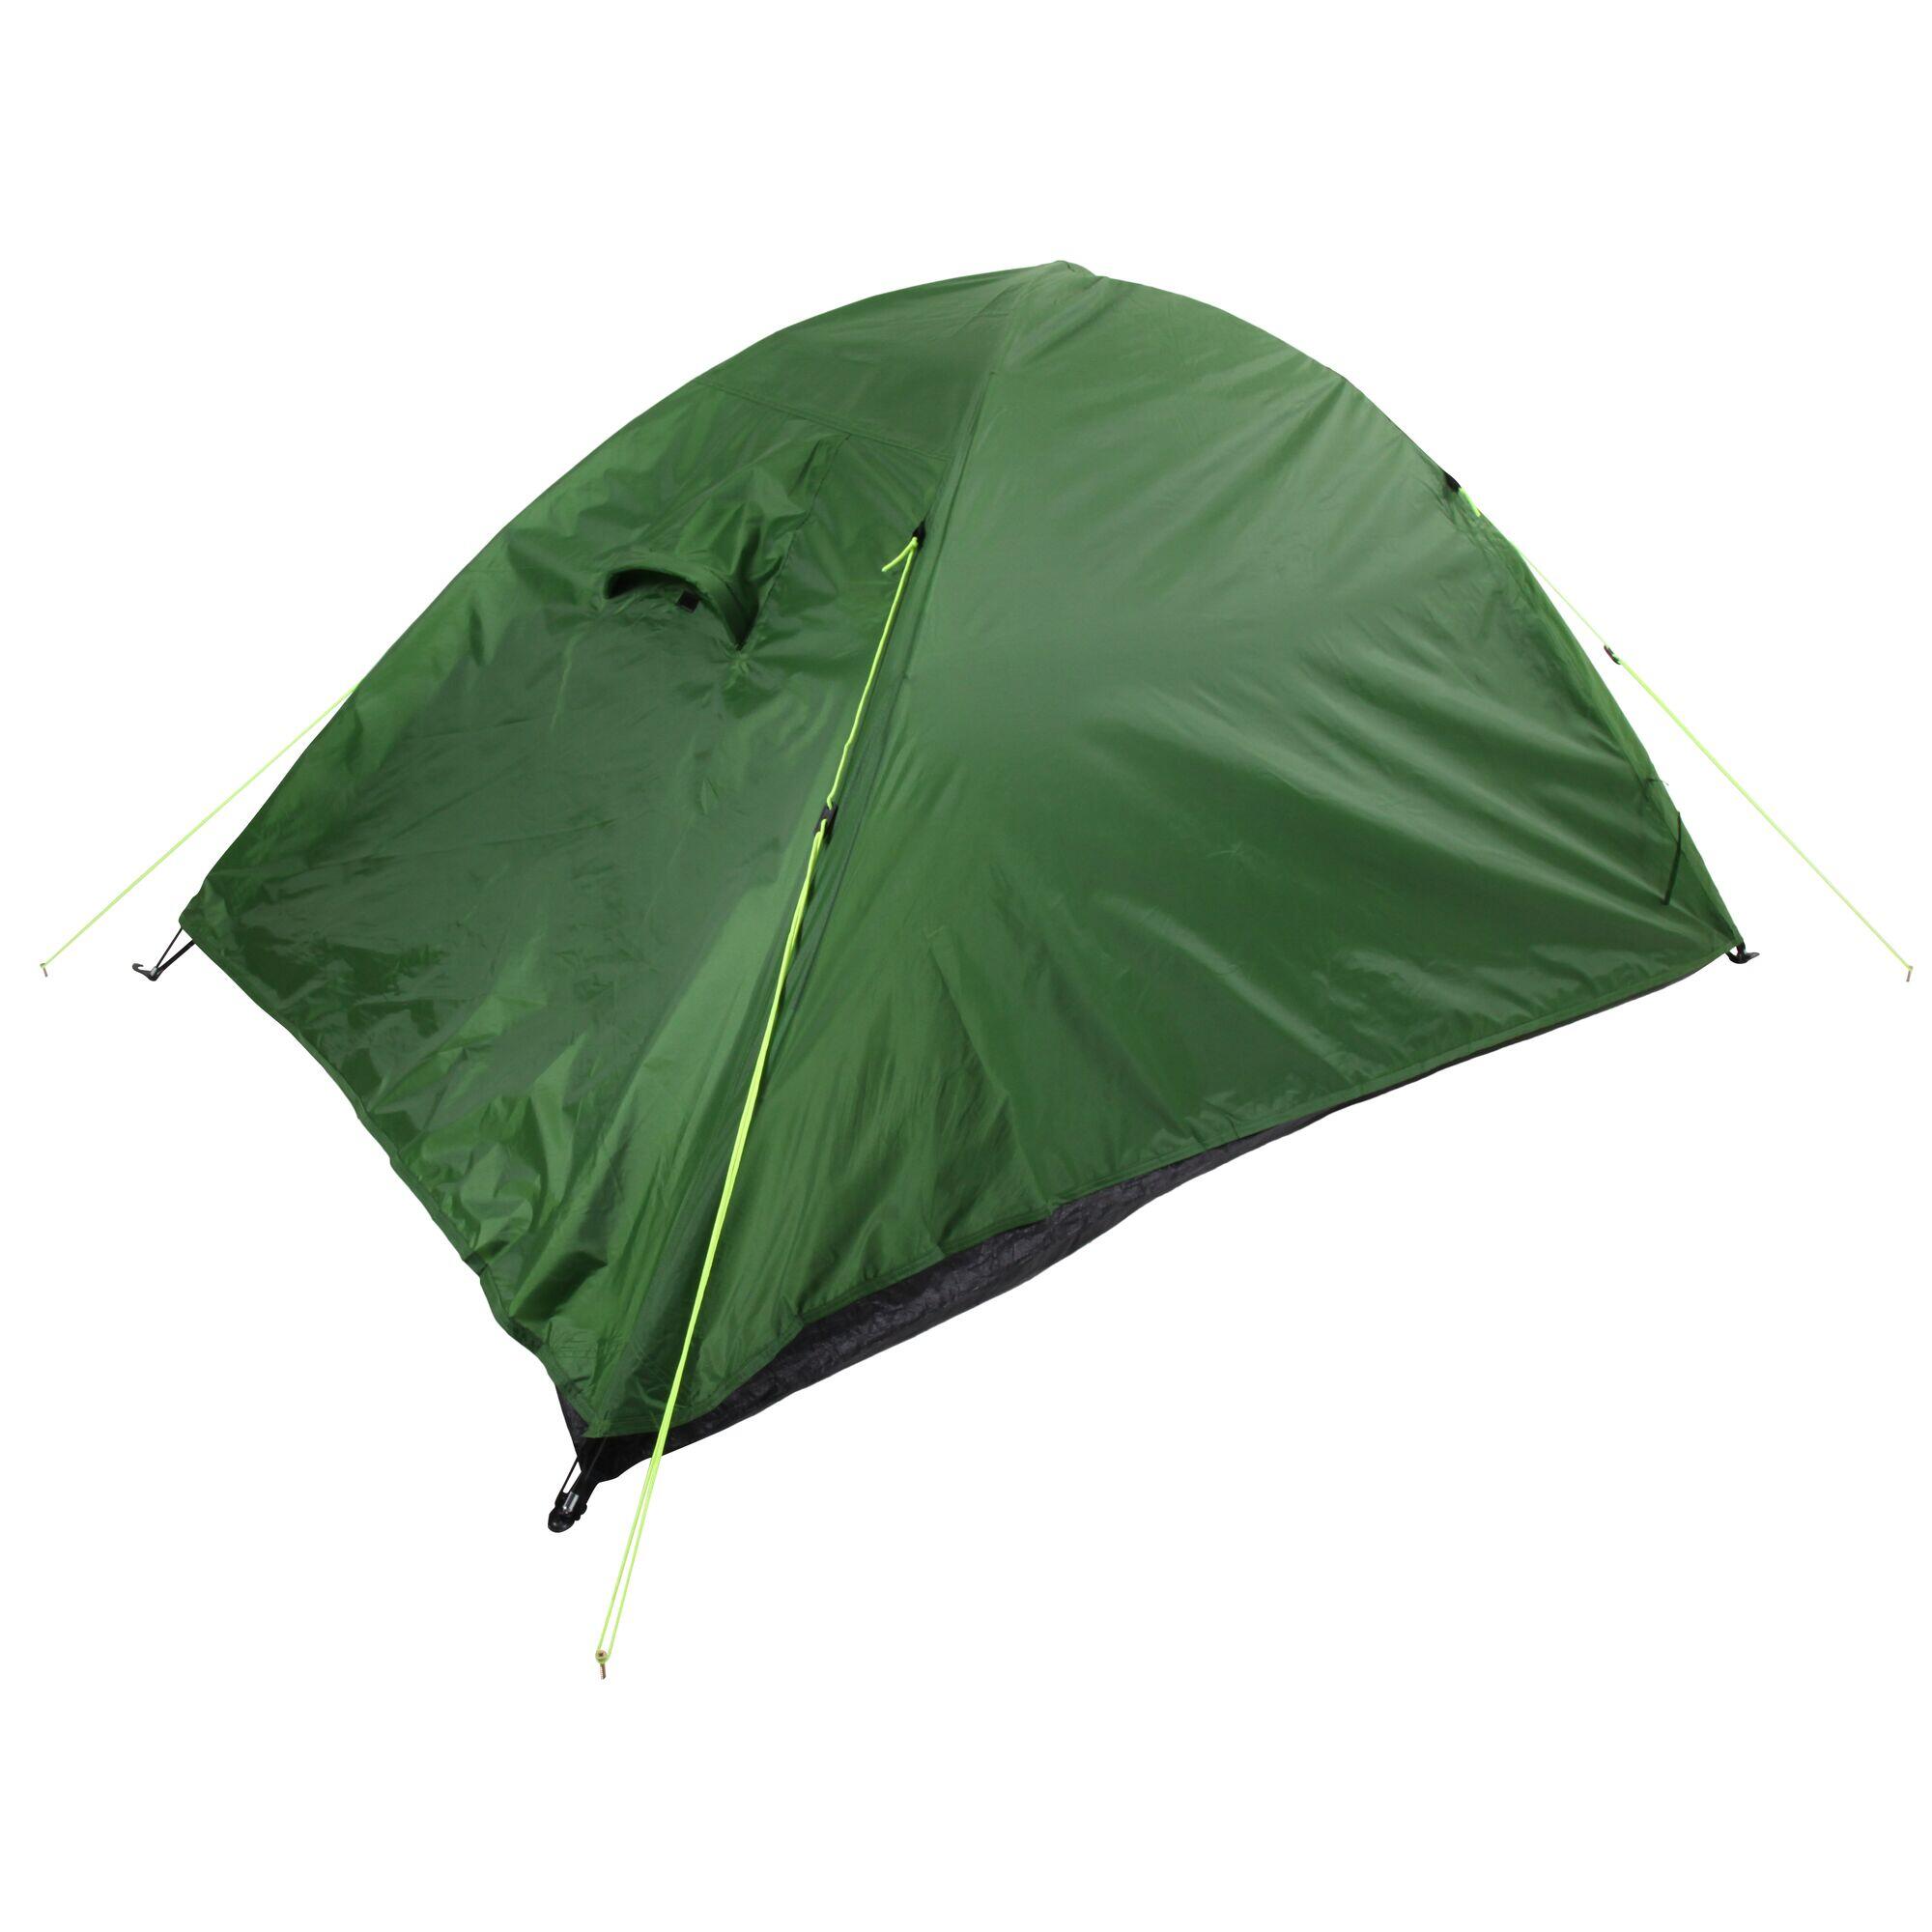 Evogreen 2-Man Adults' Camping Camping Tent 3/5